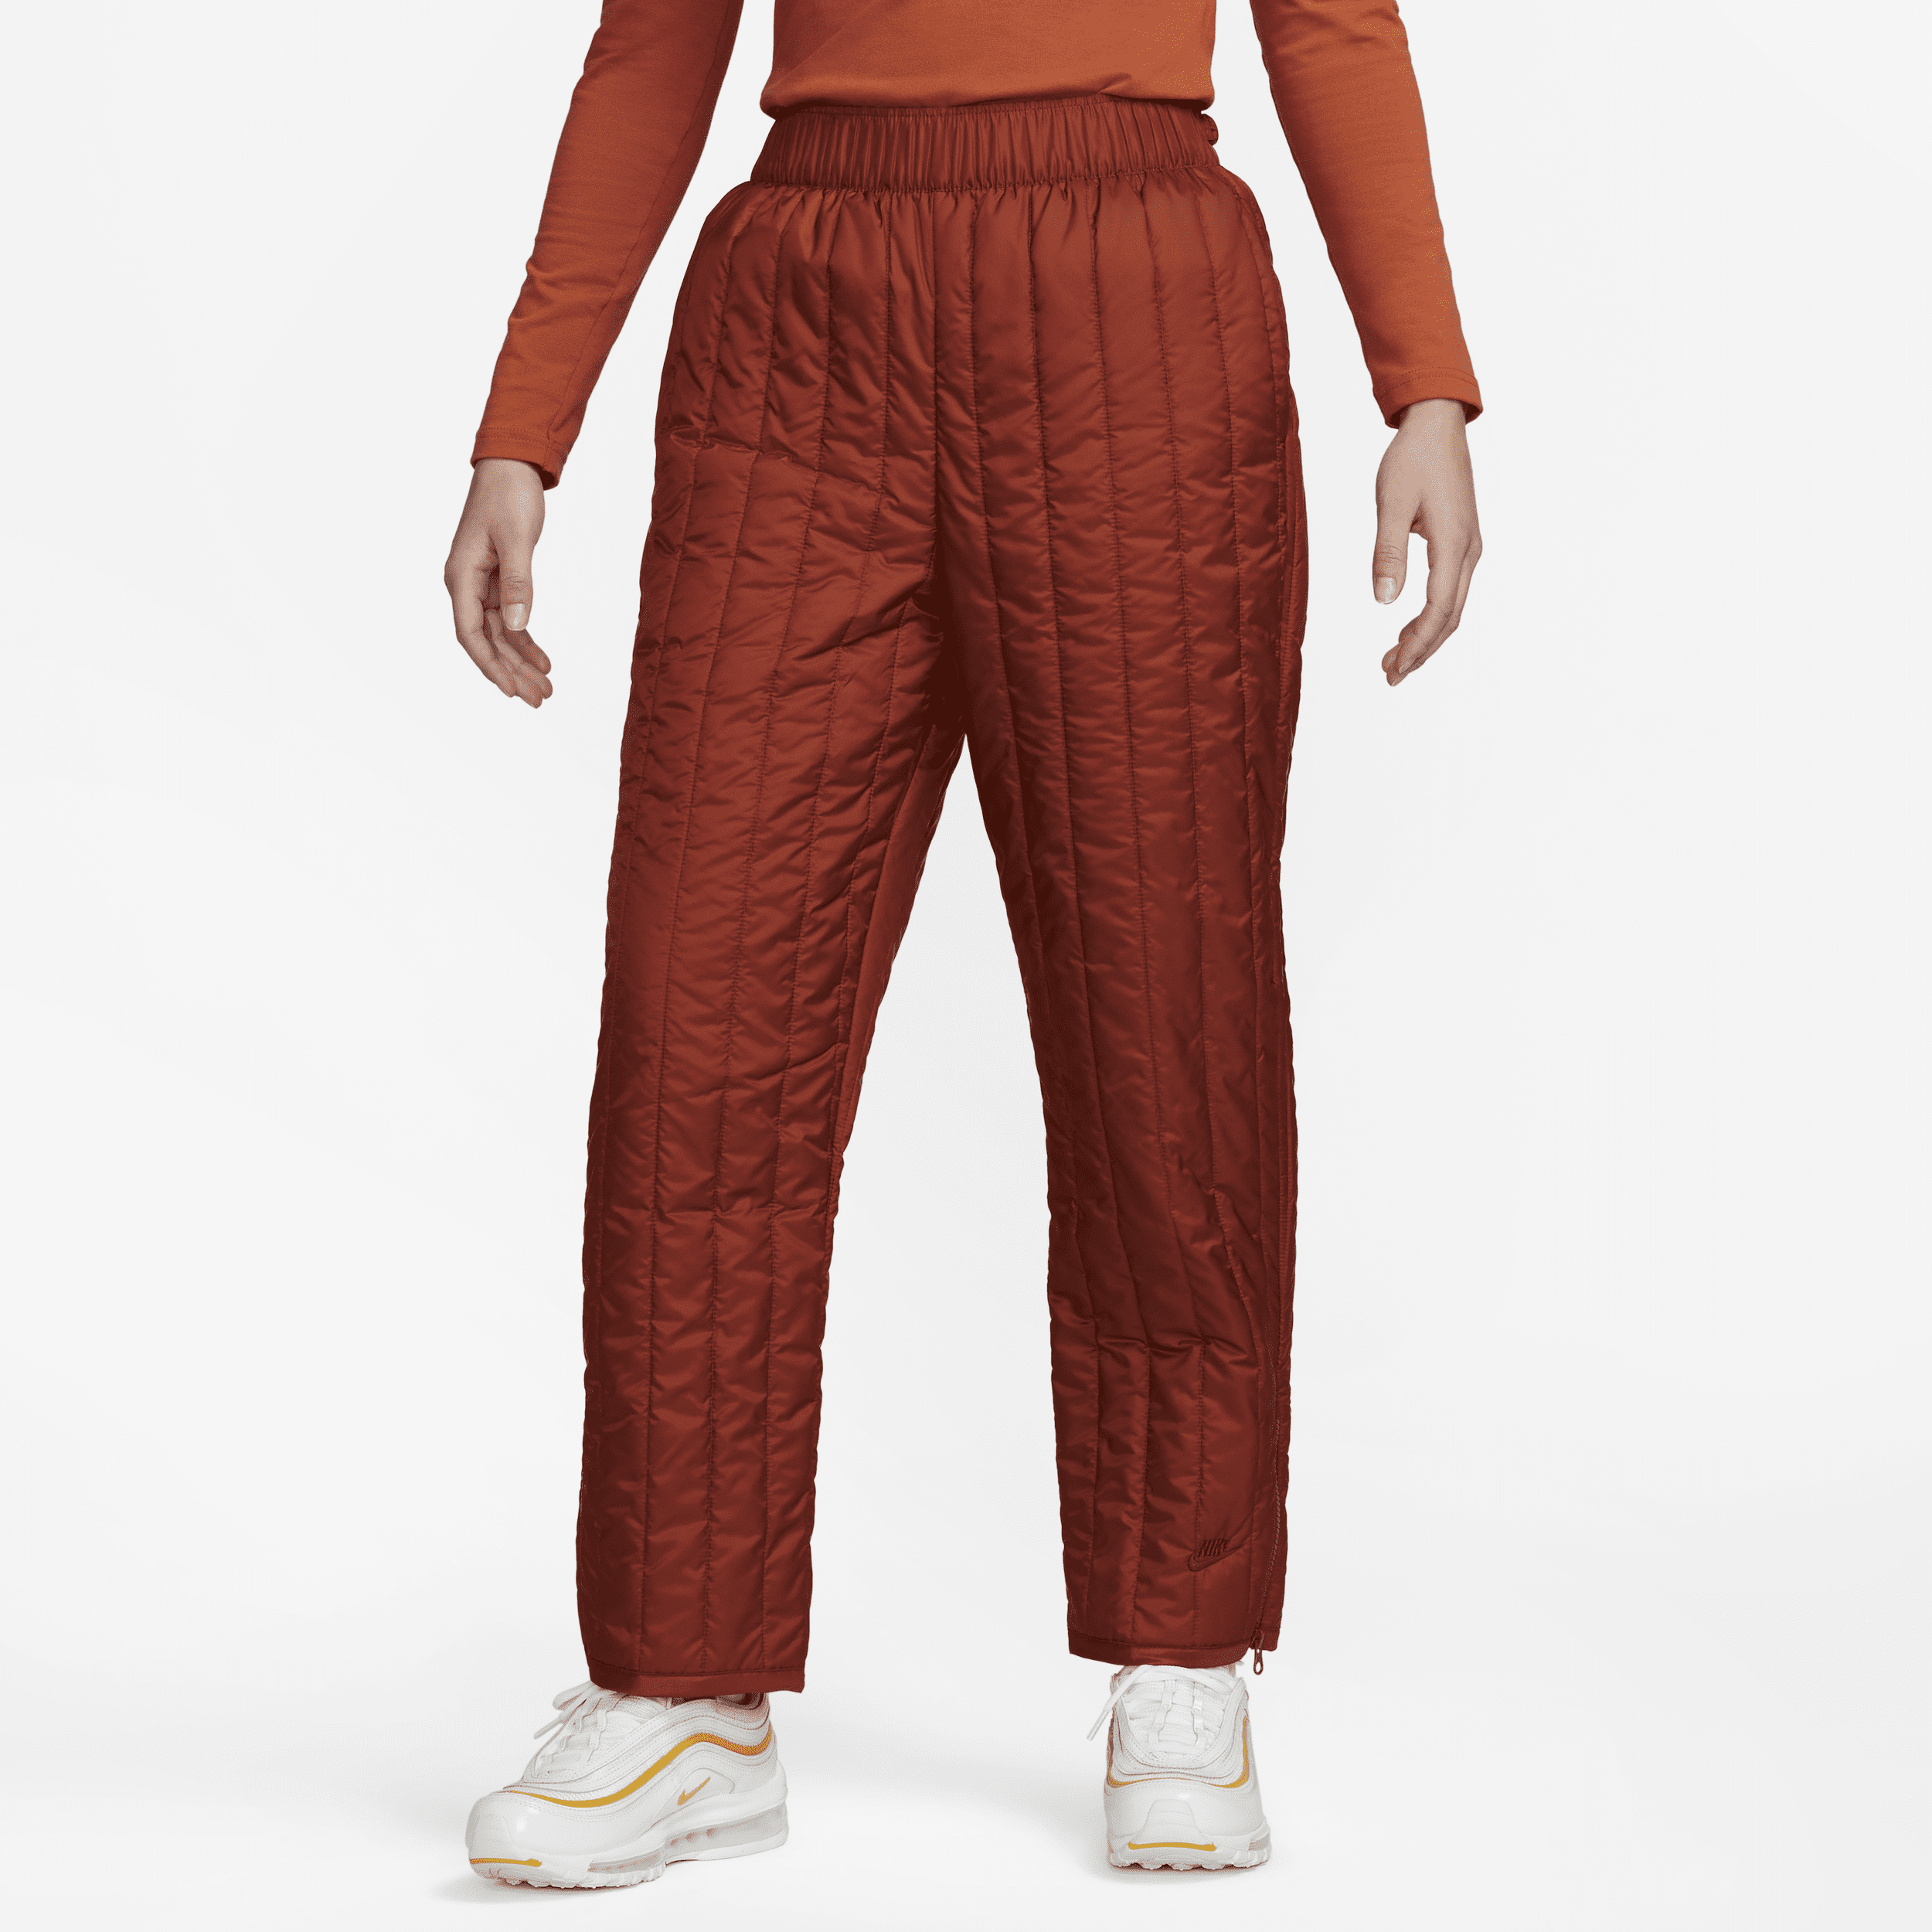 Nike Sportswear Therma-FIT Tech Pack-bukser med høj talje til kvinder - rød